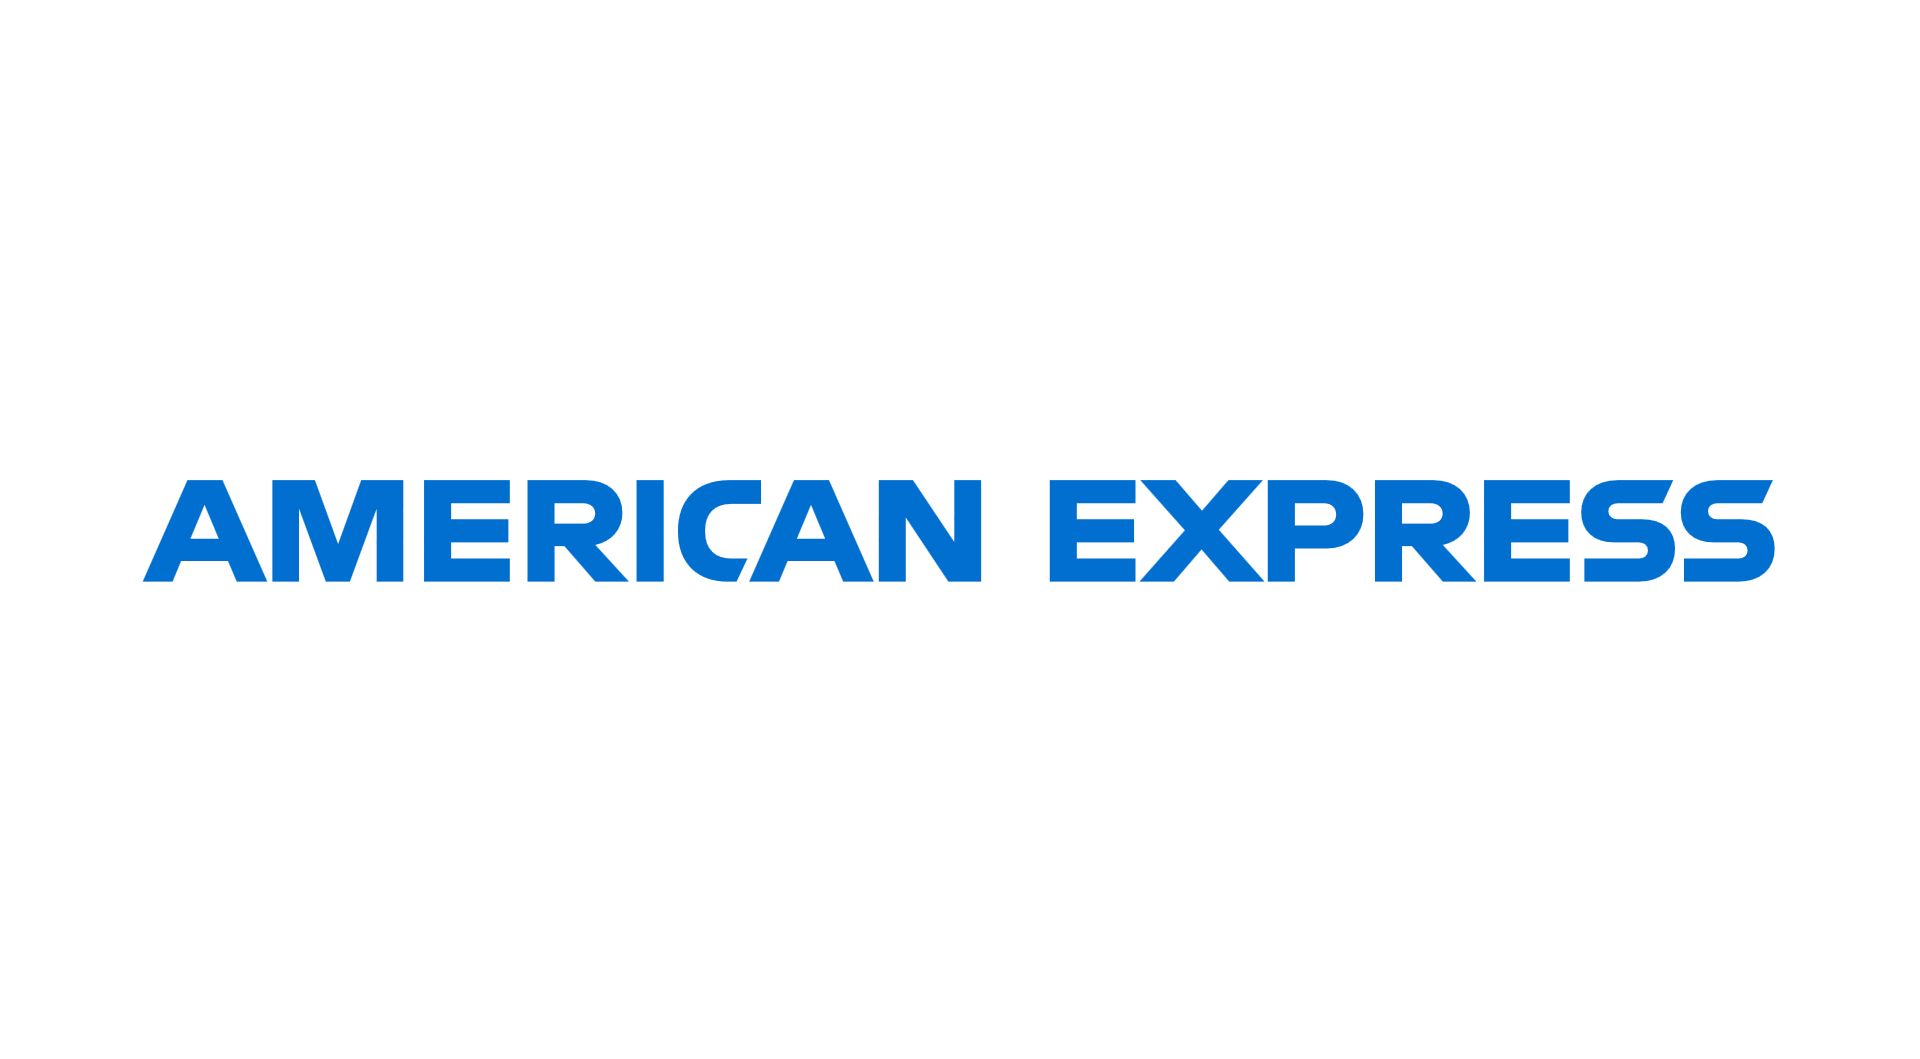 American-Express-Logotype-Single-Line.png